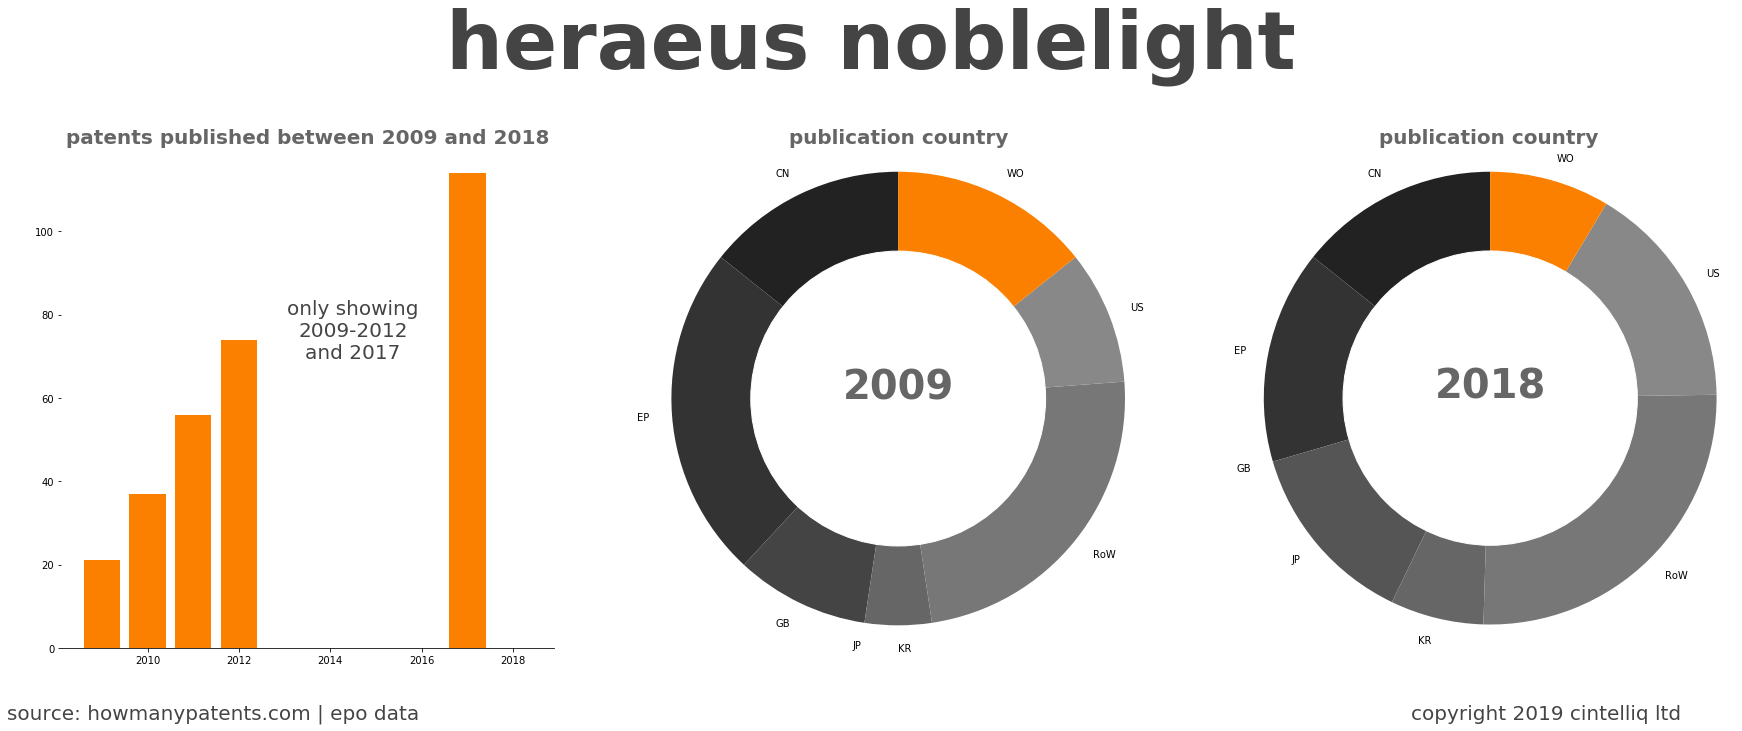 summary of patents for Heraeus Noblelight